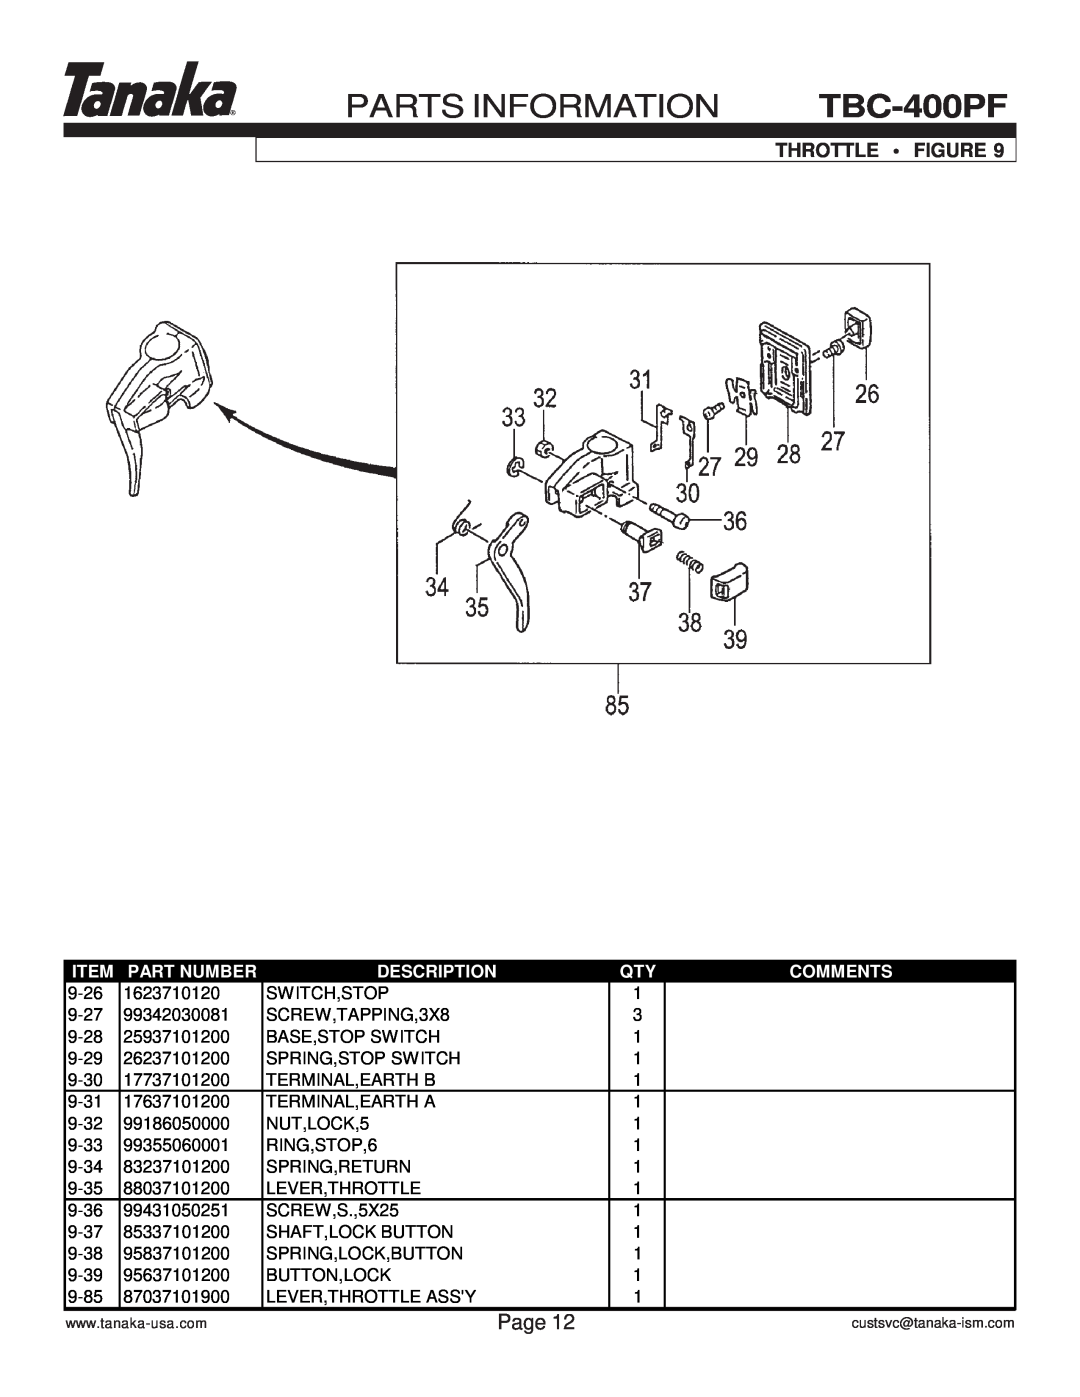 Tanaka TBC-400PF manual Throttle Figure, Parts Information, Page, Part Number, Description, Comments 